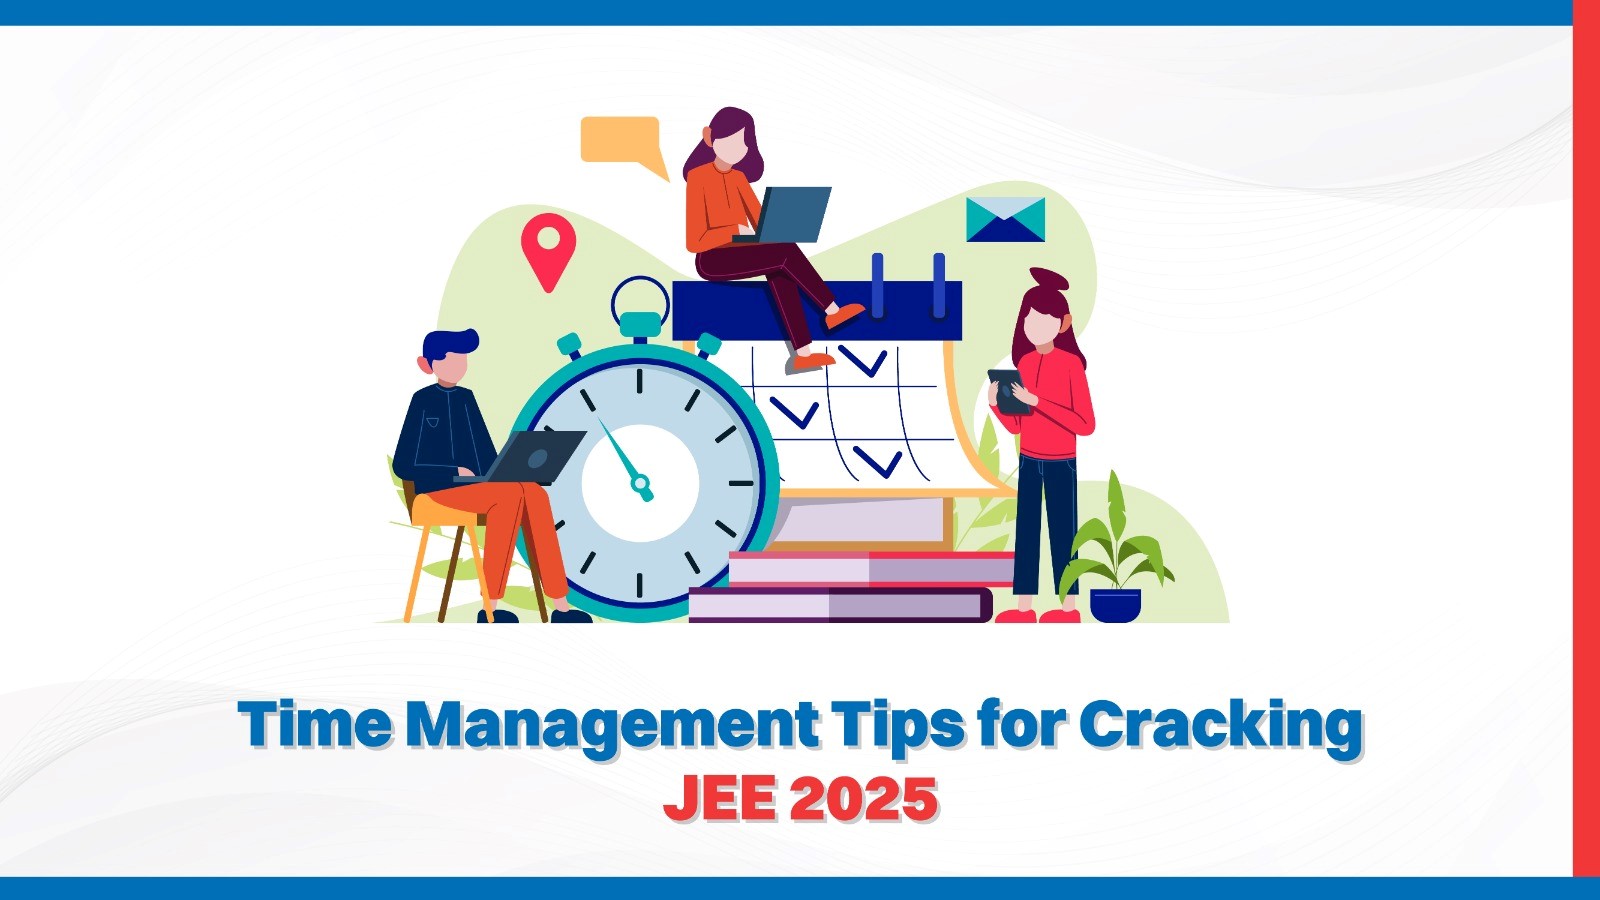 Time Management Tips for Cracking JEE 2025.jpg